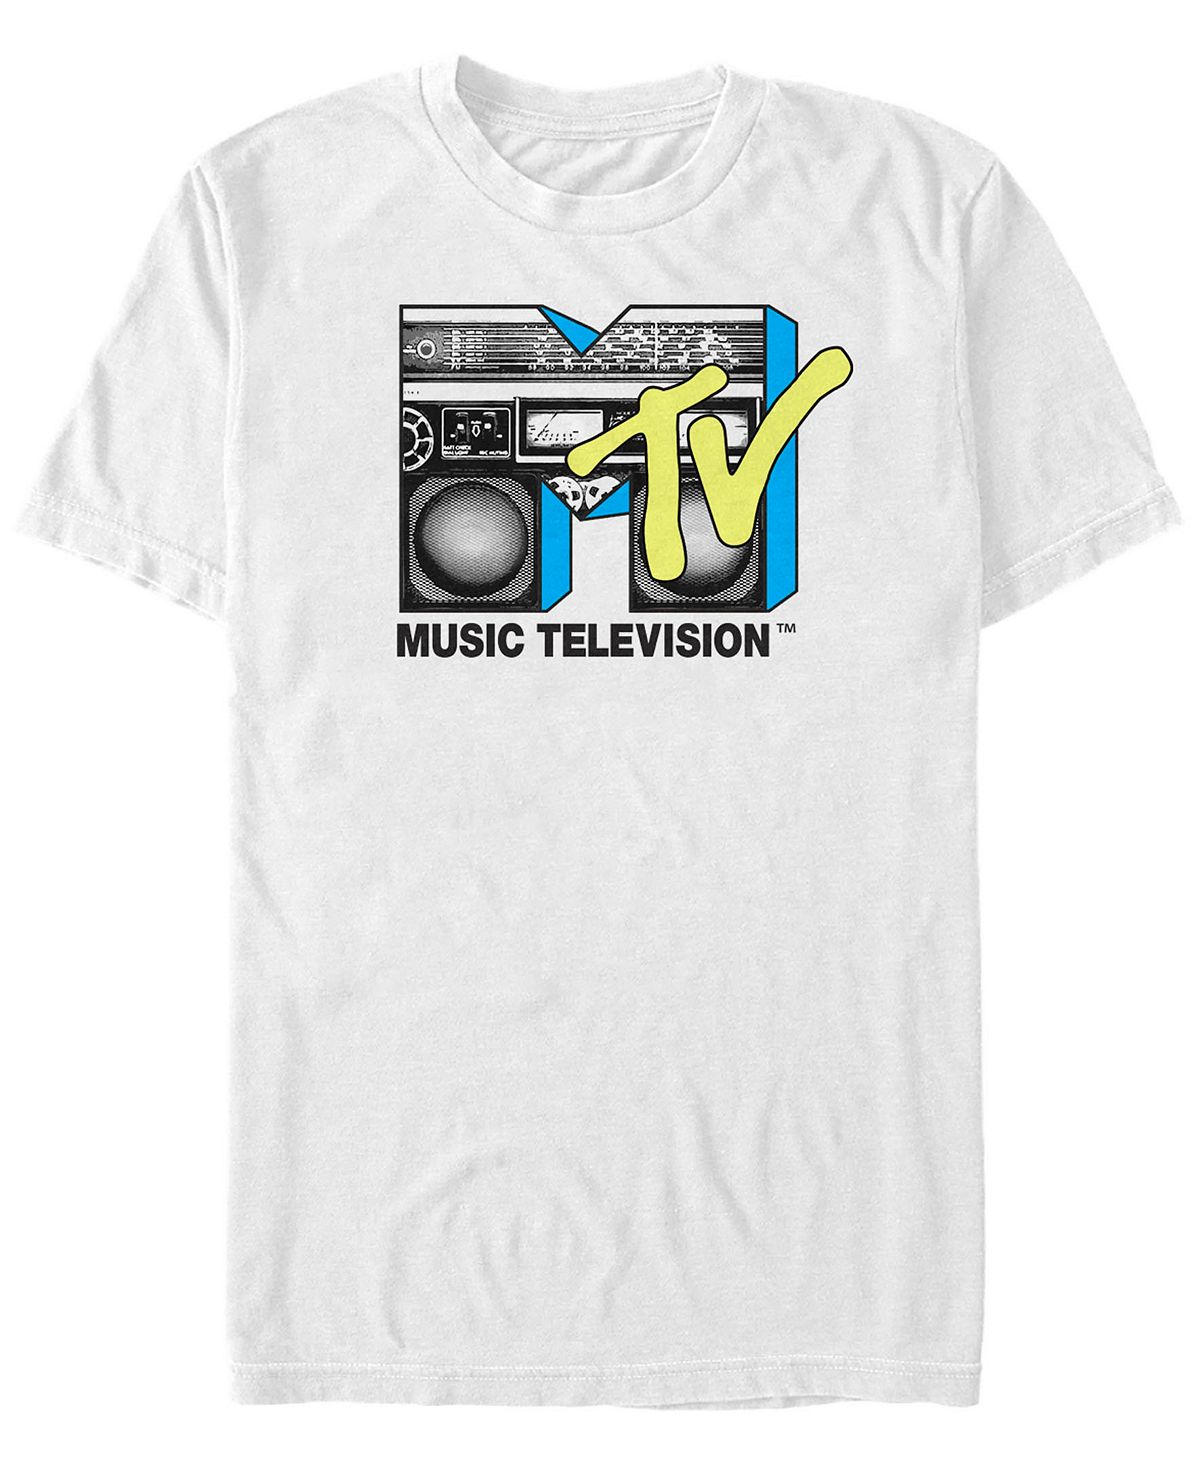 Мужская черно-желтая футболка с коротким рукавом boombox с логотипом Fifth Sun, белый пульт для телевизора bbk rc3229 mystery mtv 1914lw